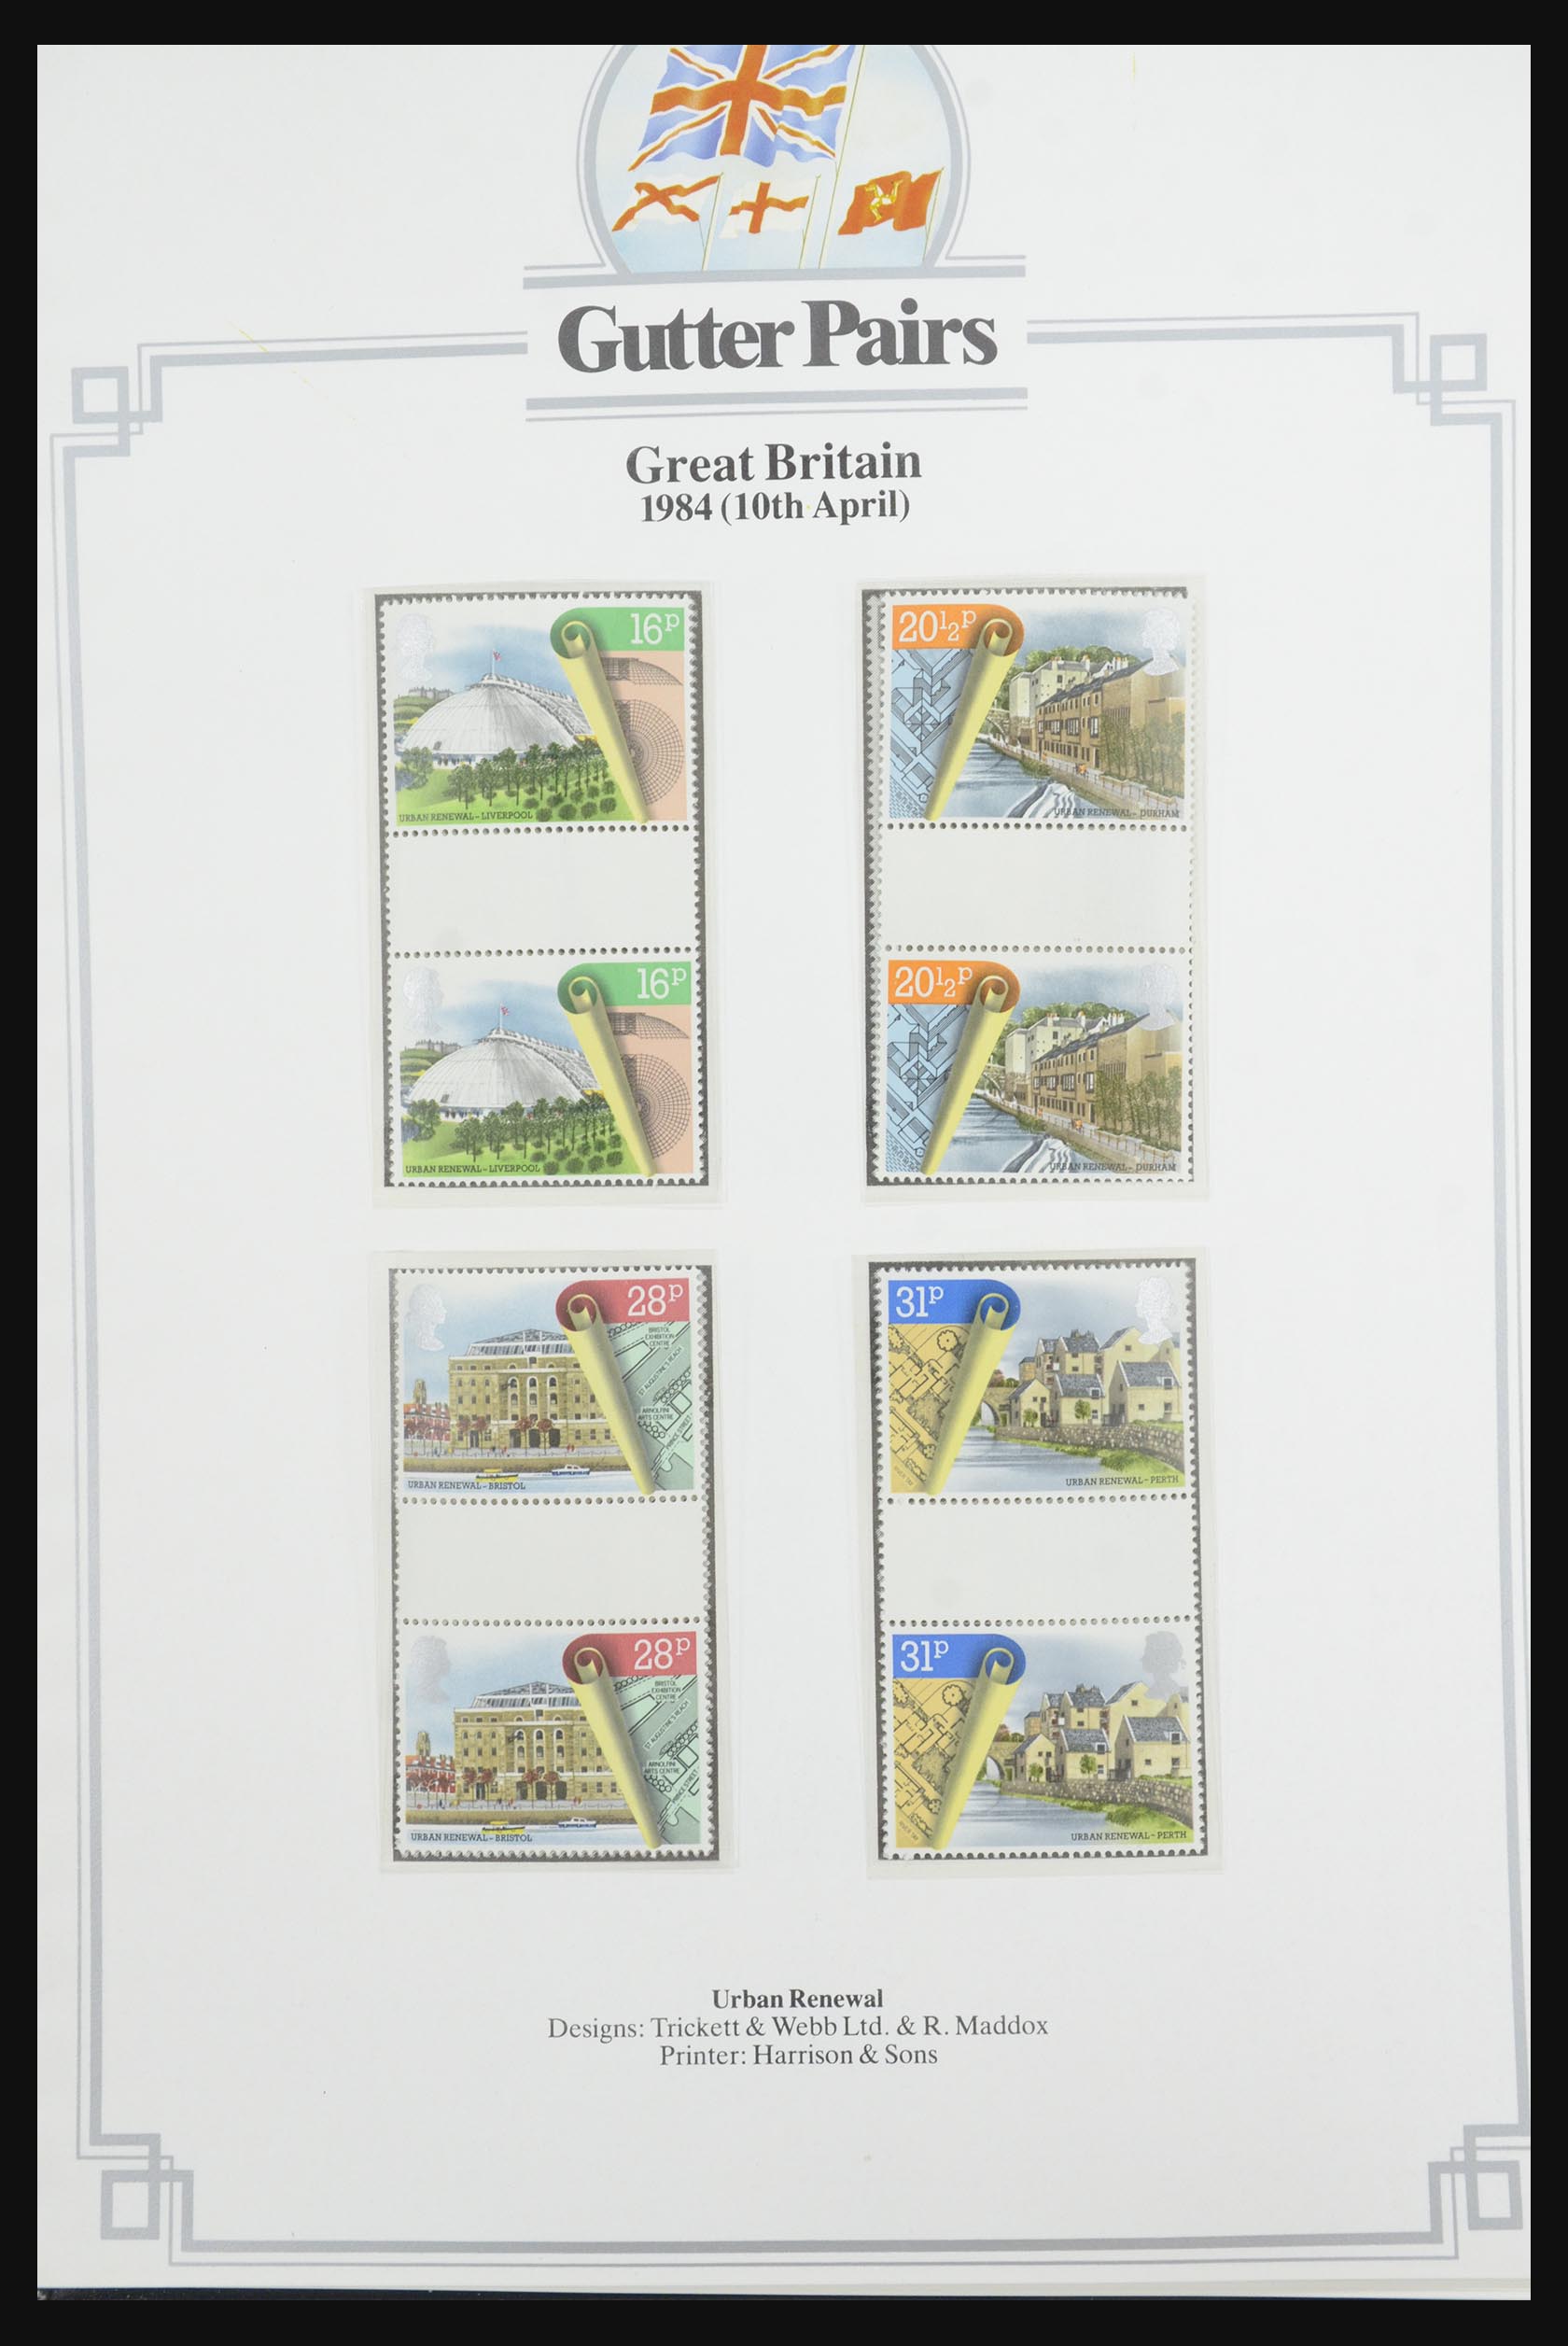 31717 044 - 31717 Great Britain gutterpairs 1976-1991.